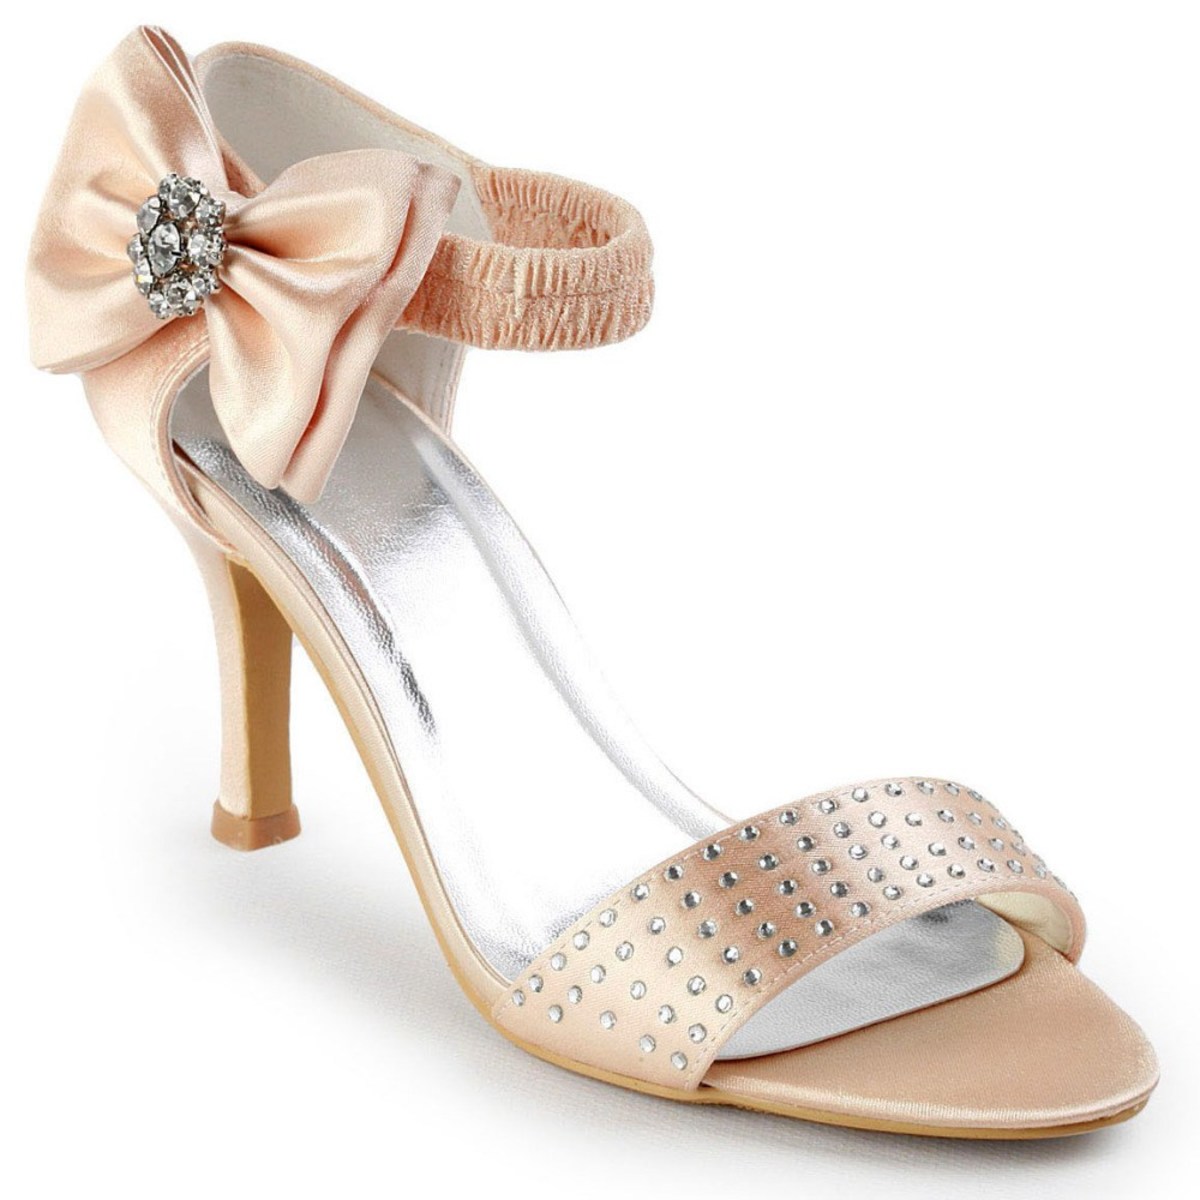 Champagne Sandals Heels - Amazon Womens Champagne High Heels Peep Toe Sandals 